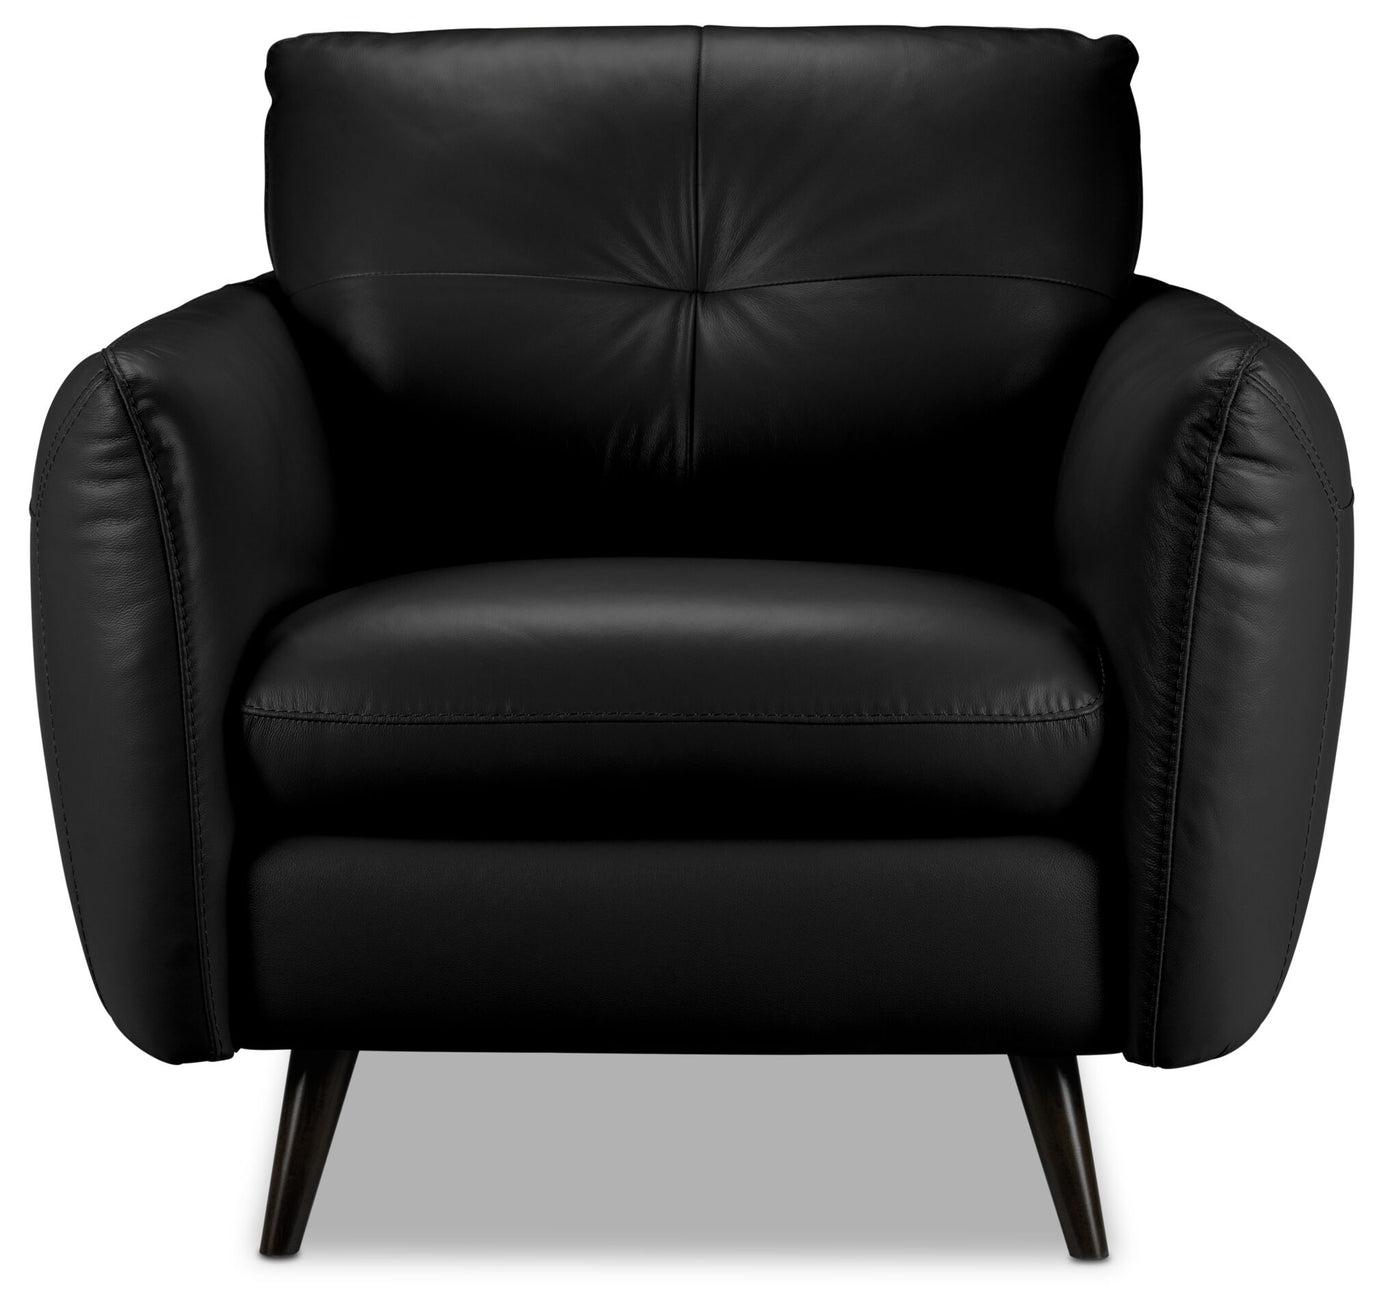 Carlino Leather Chair - Black